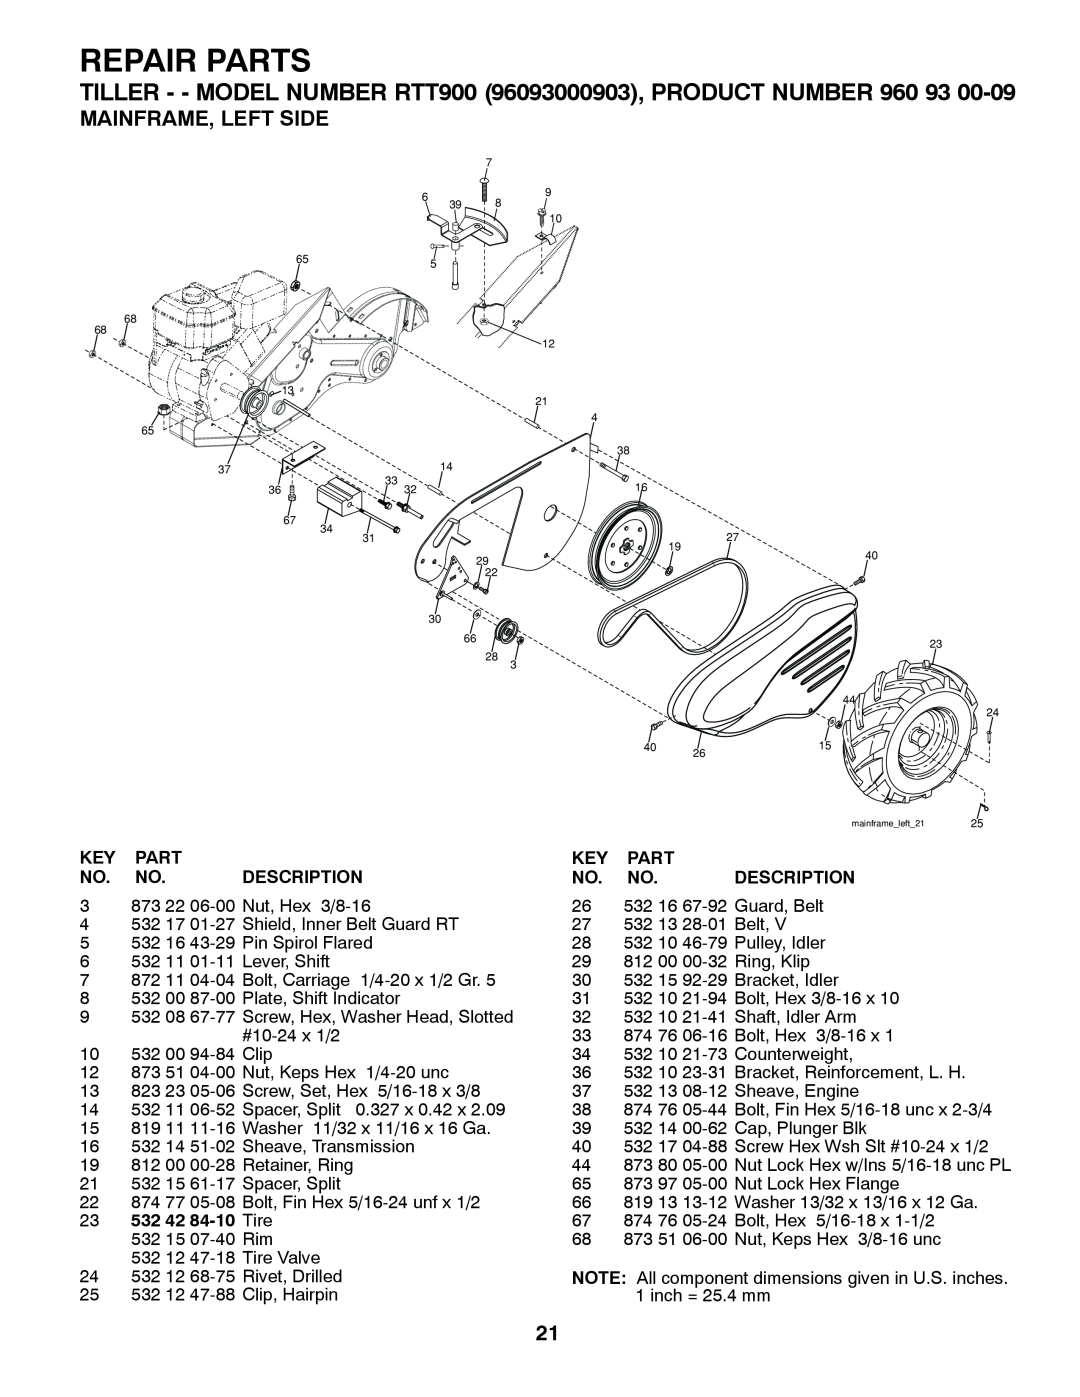 Husqvarna RTT900 owner manual Mainframe, Left Side, 532 42 84-10 Tire, Repair Parts, Description 